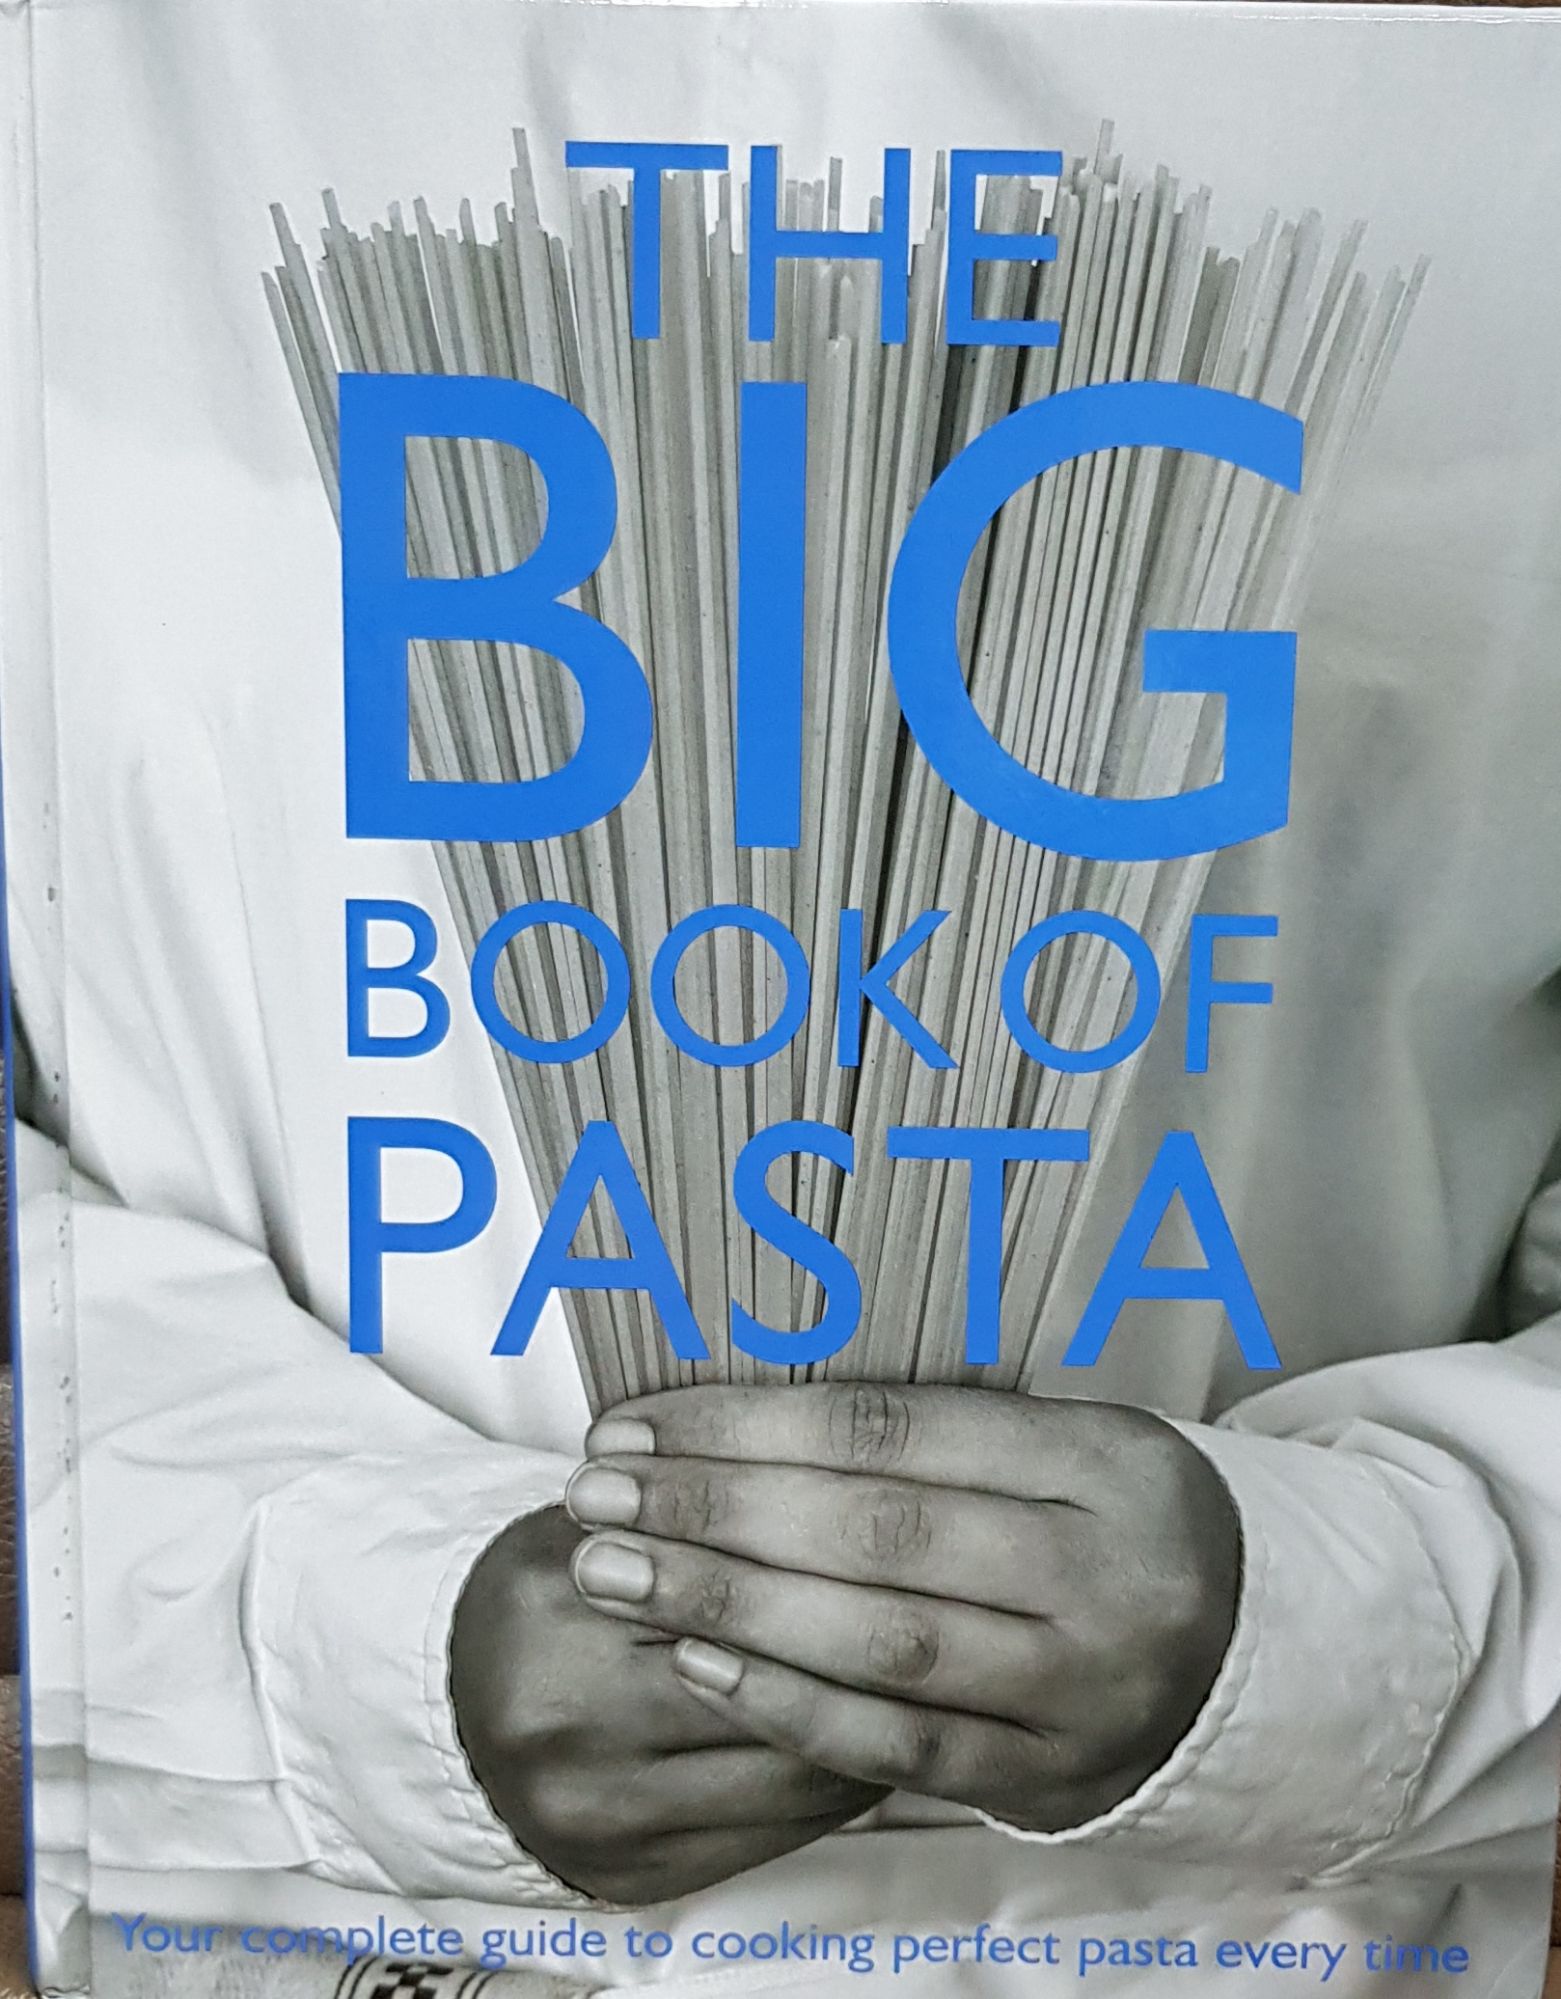 The big book of pasta